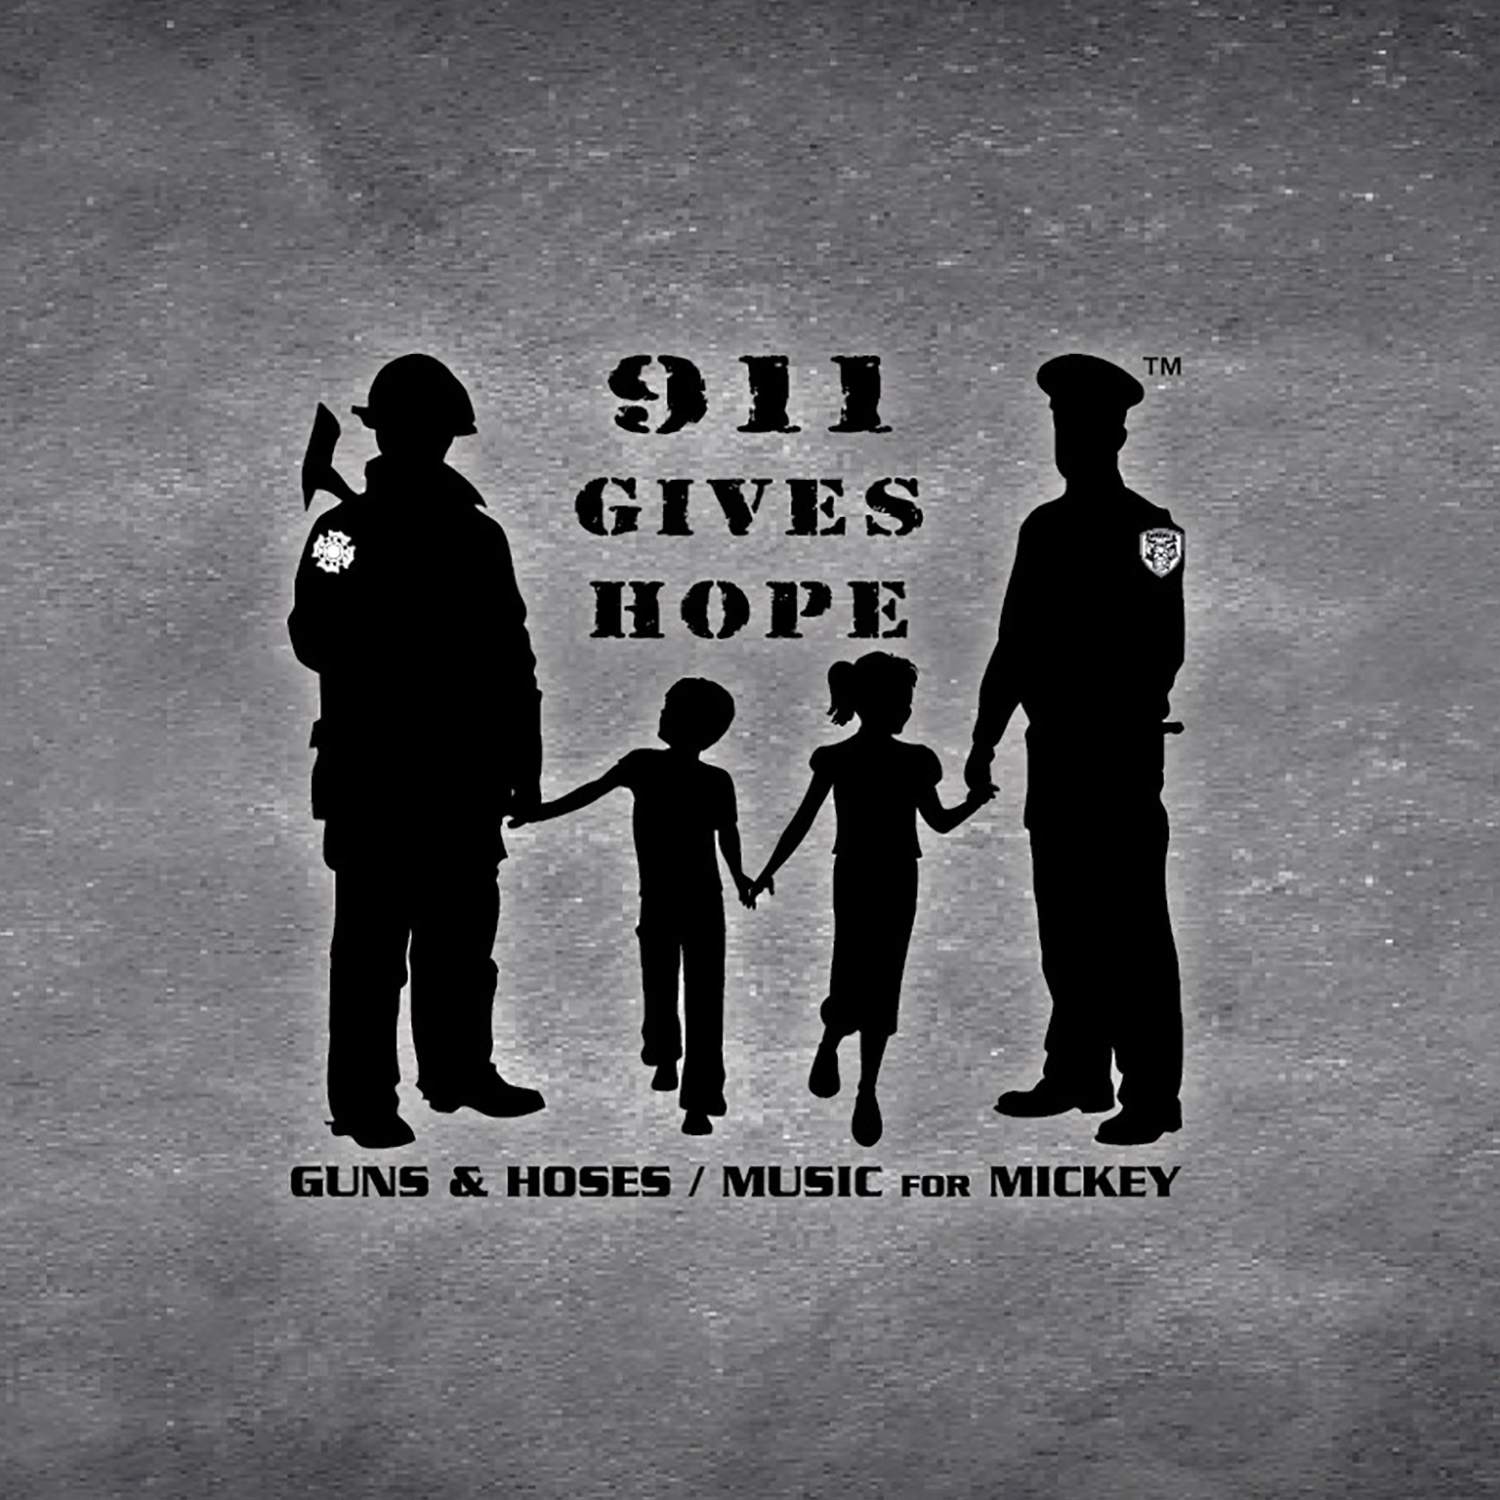 911 gives hope